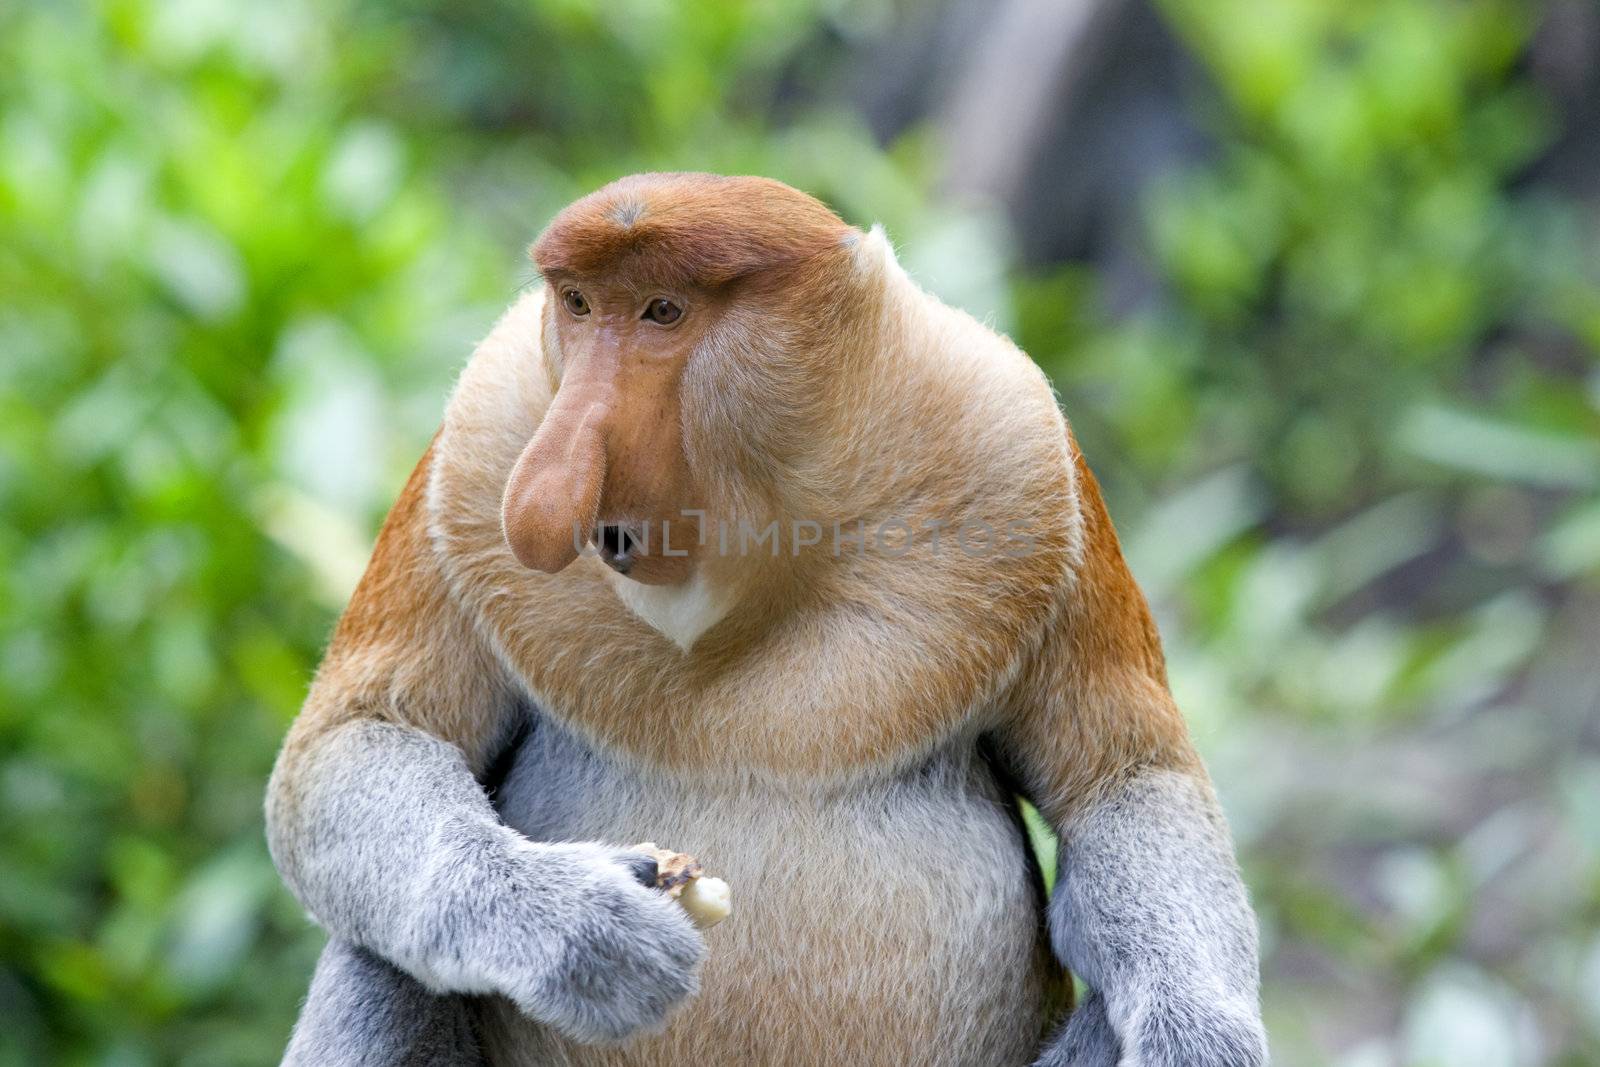 A rare proboscis monkey in the mangrove, Kota Kinabalu 